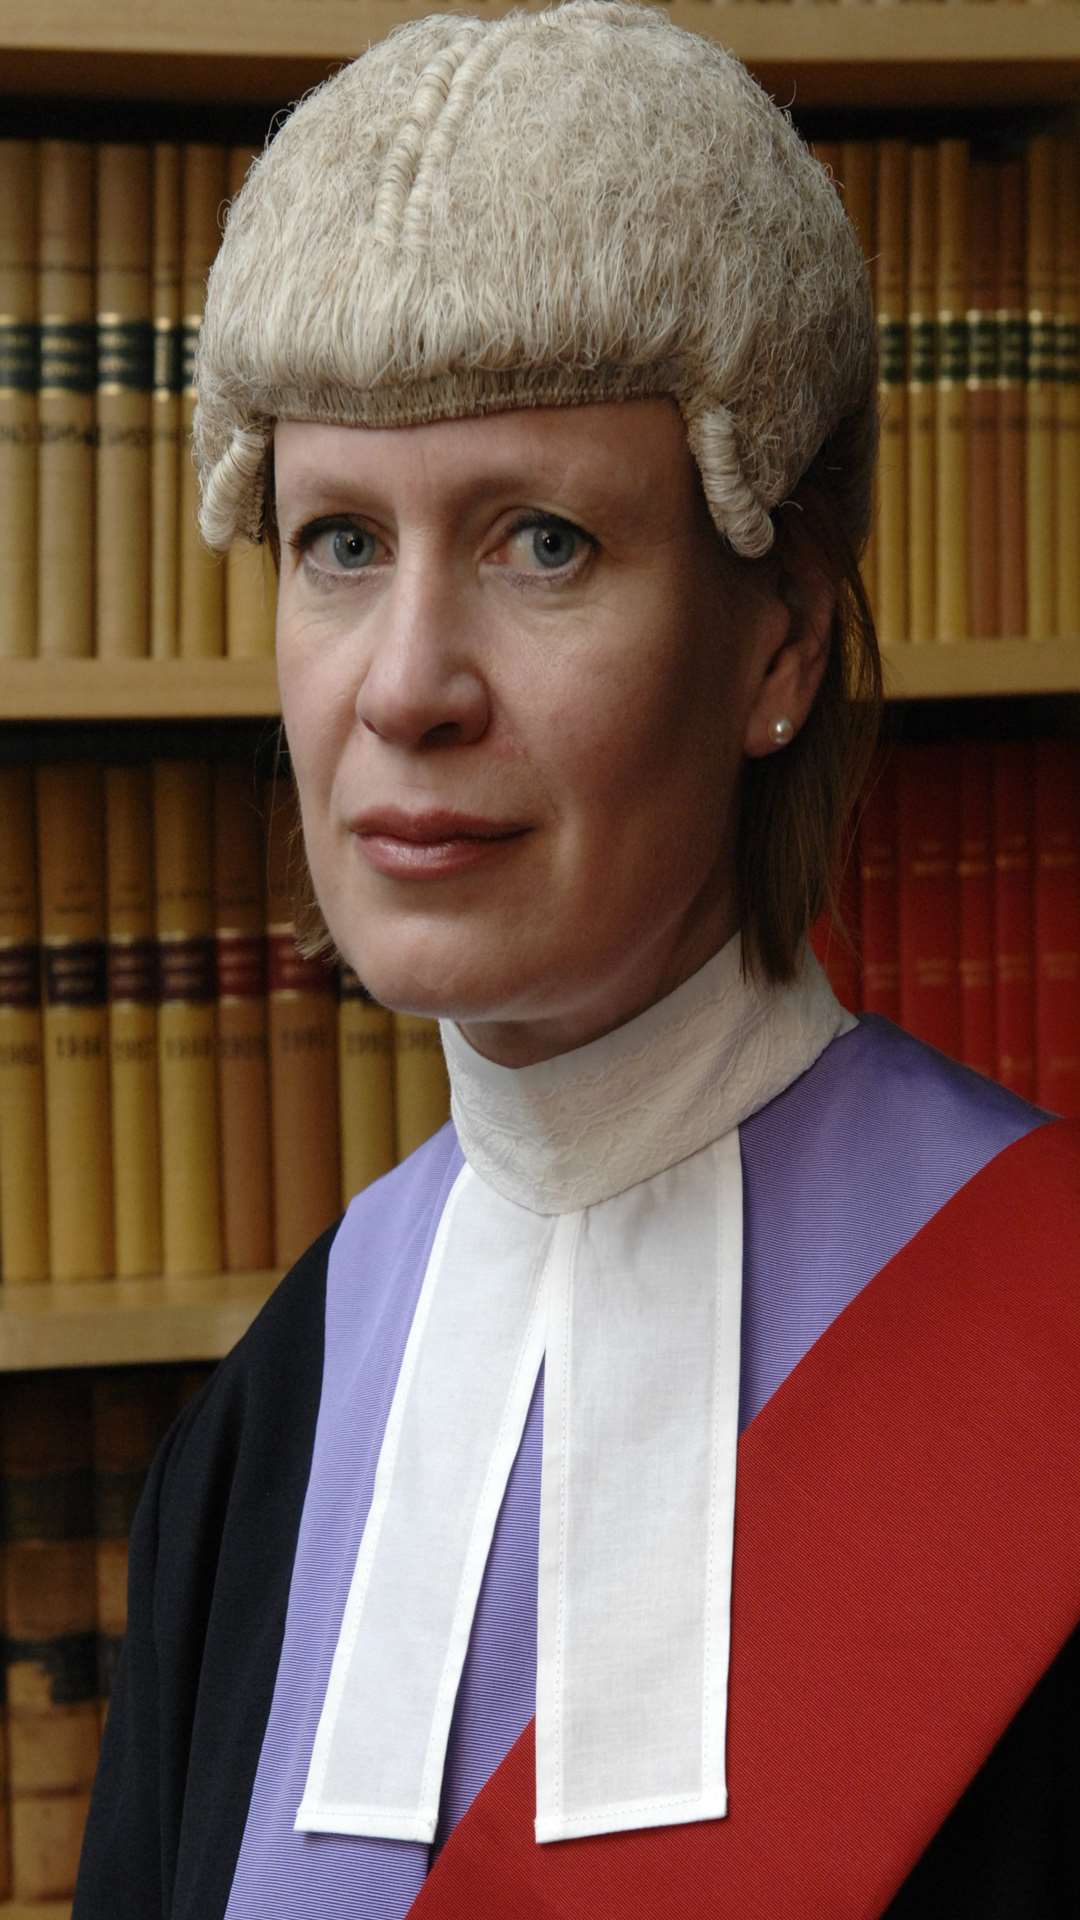 Judge Heather Norton